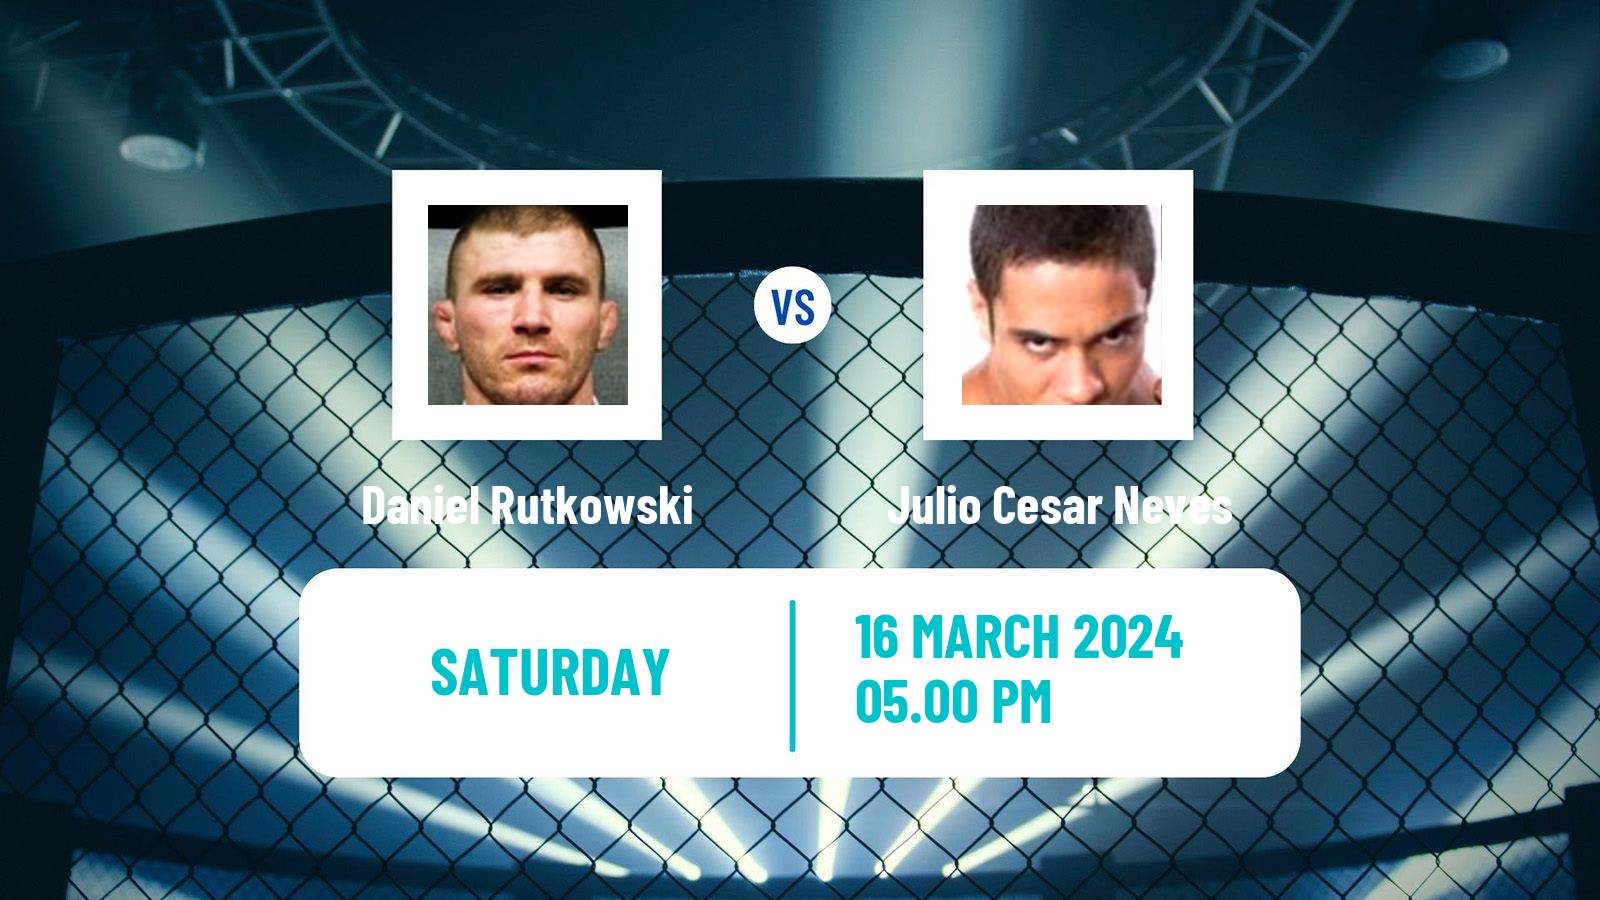 MMA Featherweight Ksw Men Daniel Rutkowski - Julio Cesar Neves